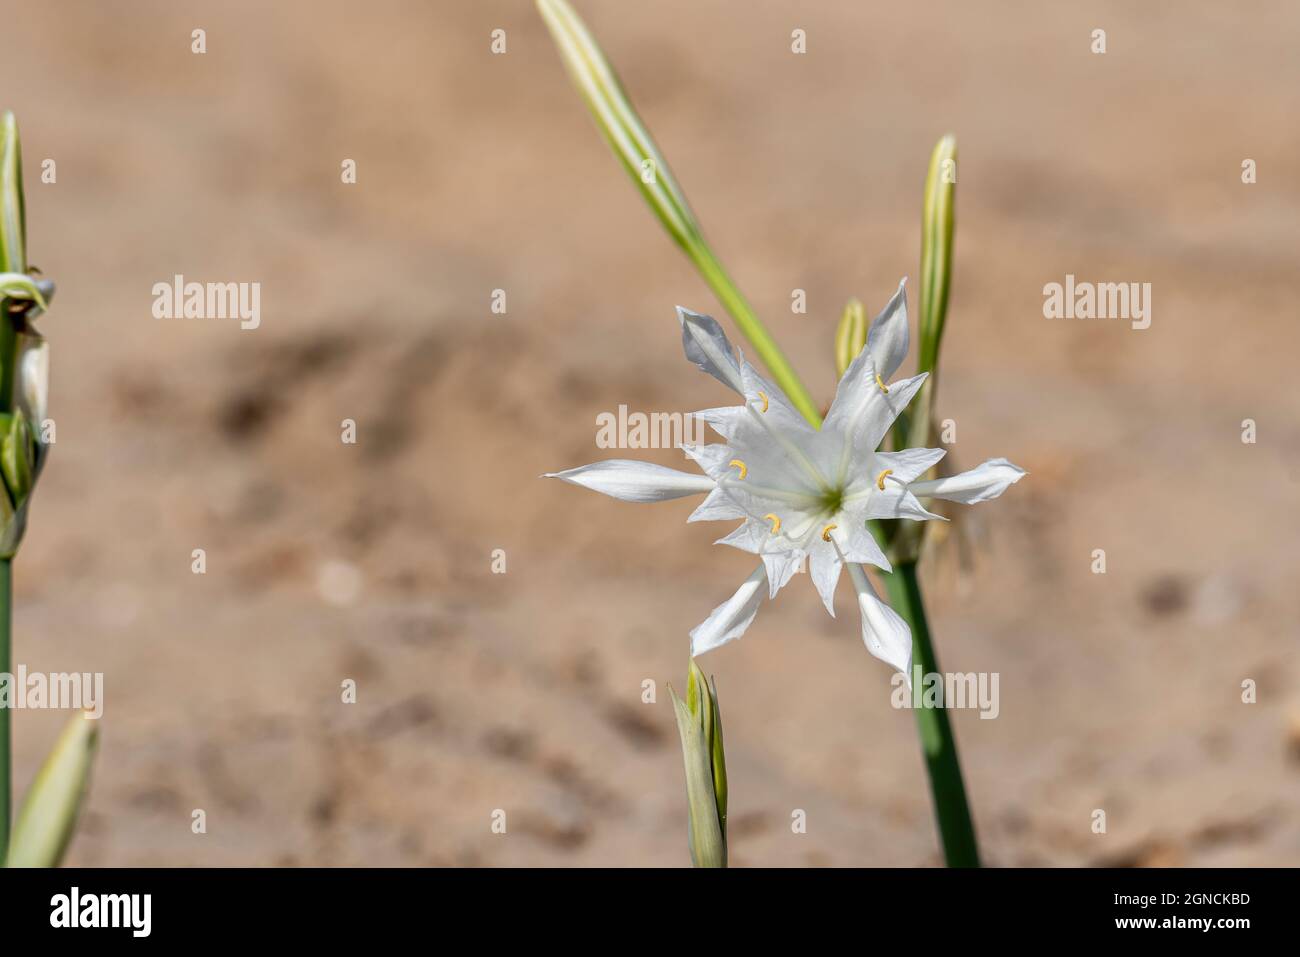 Sea daffodil - Pancratium maritimum grows on coastal sands and it is a bulbous perennial flower. Israel. Stock Photo